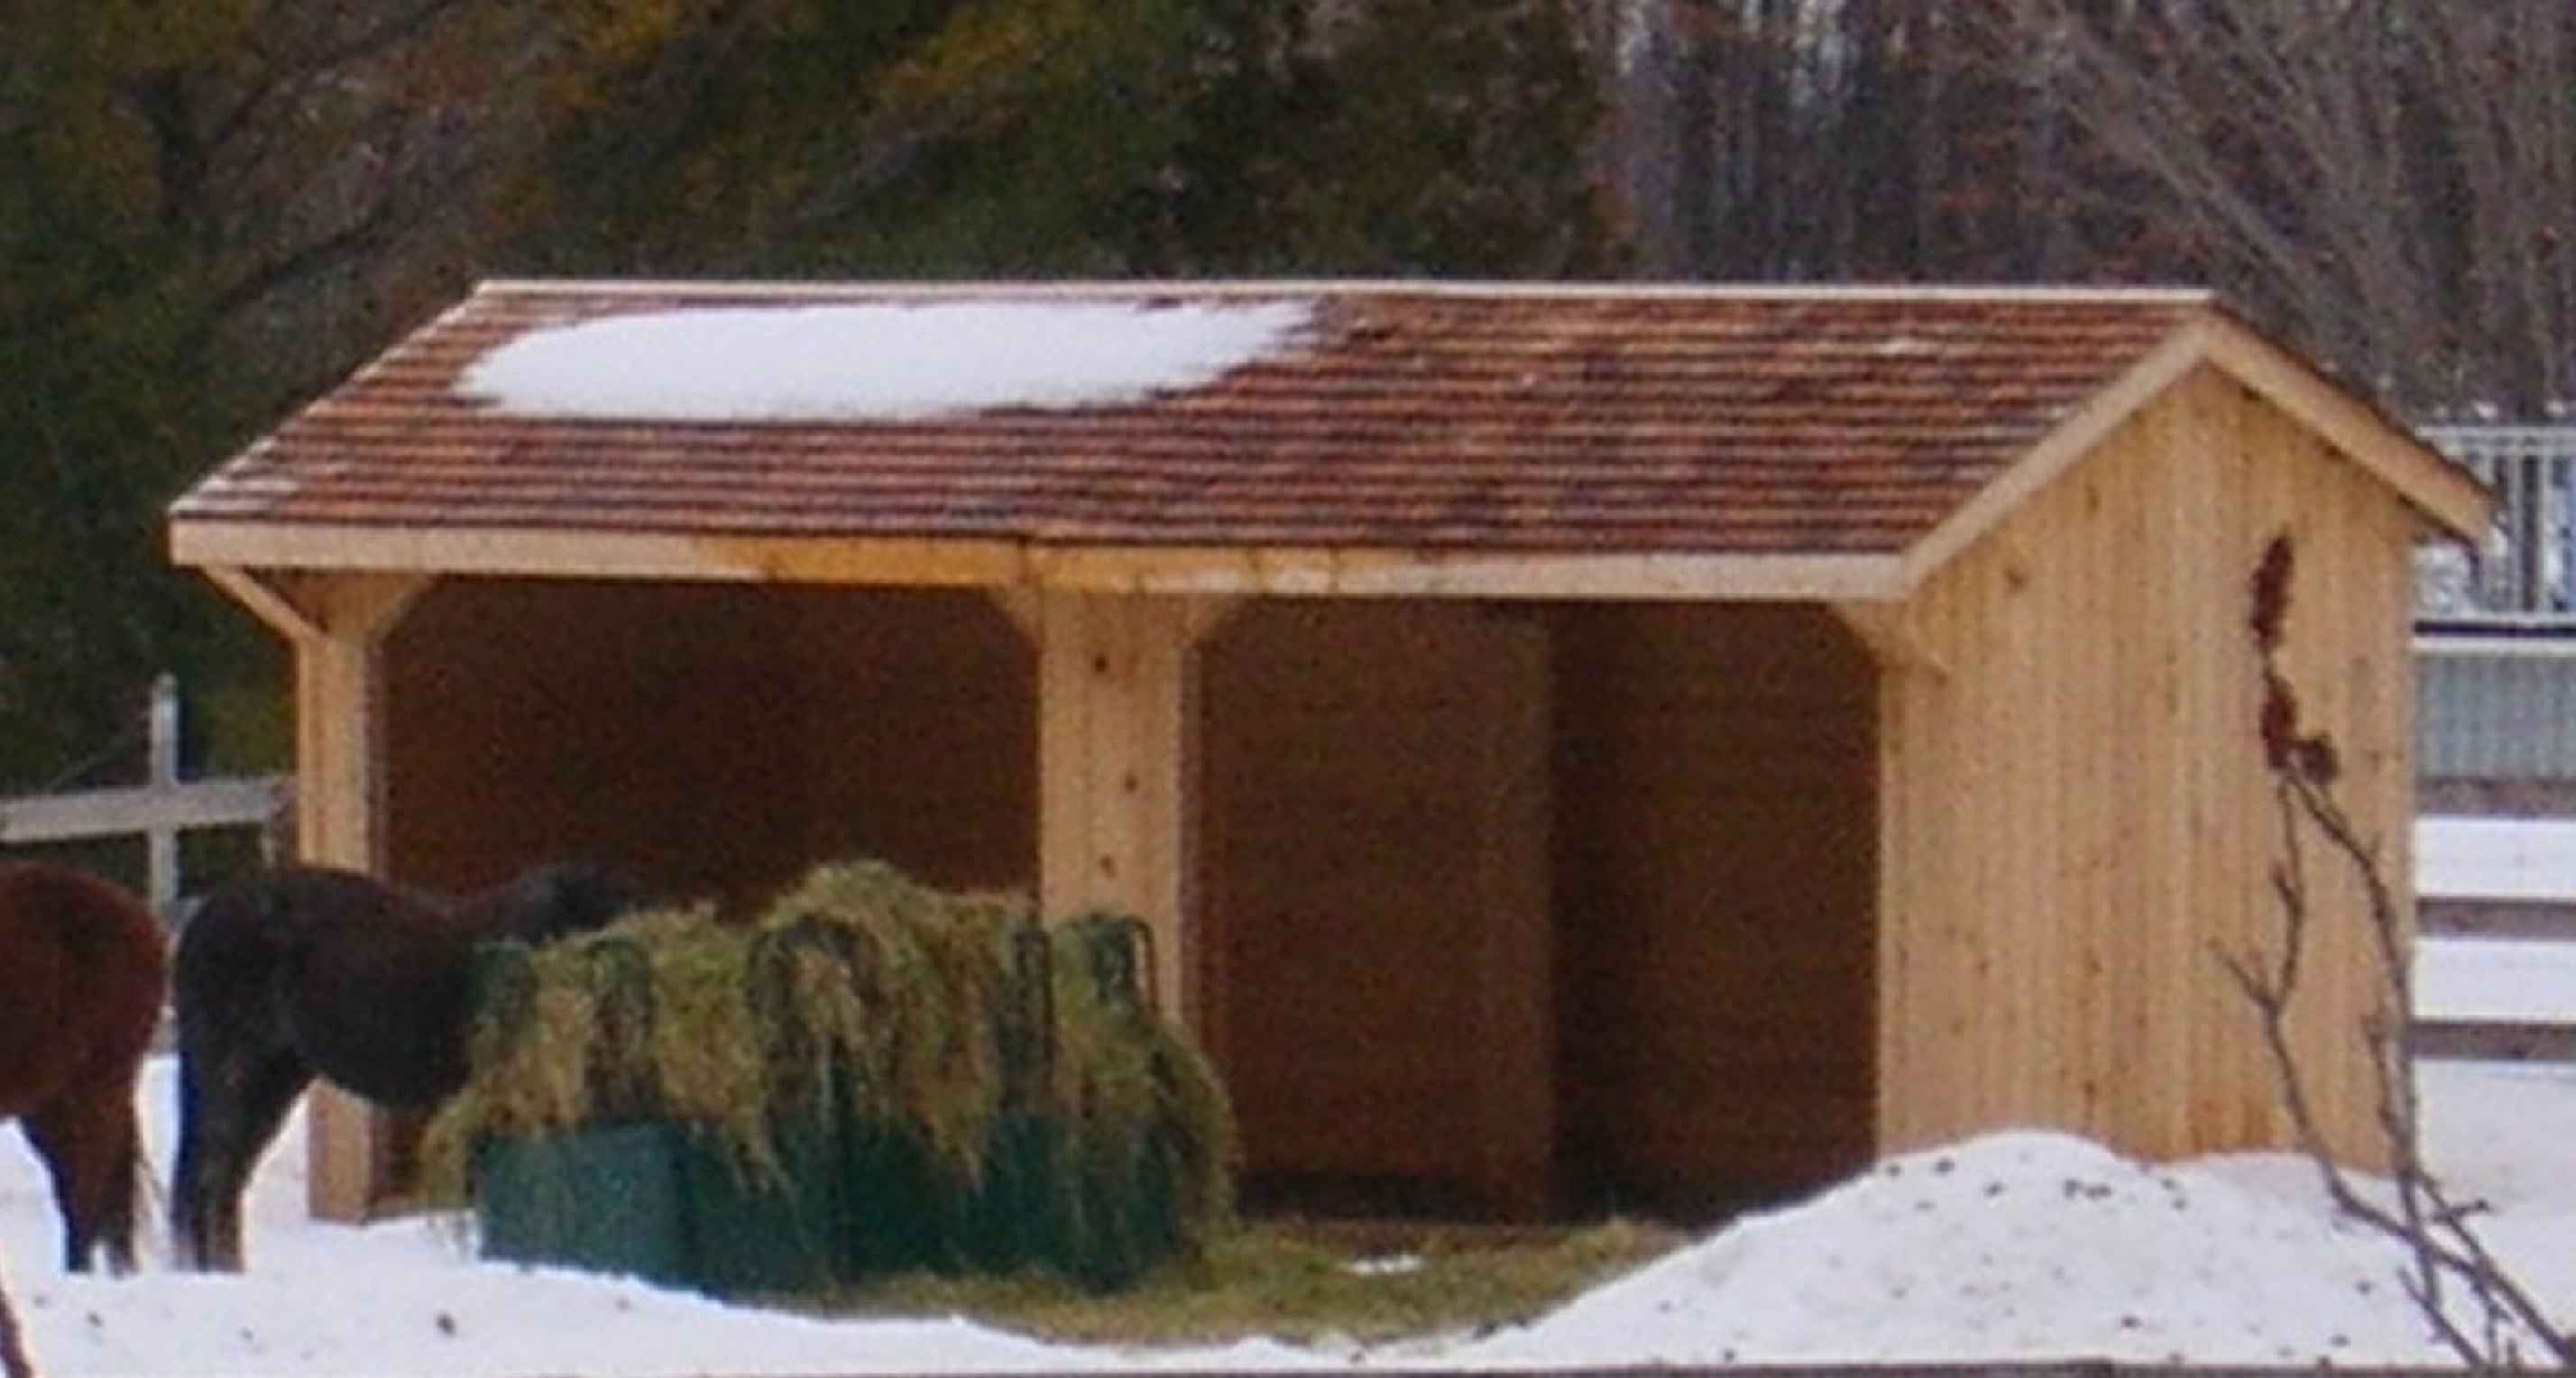 pole barn construction plans how to build diy blueprints